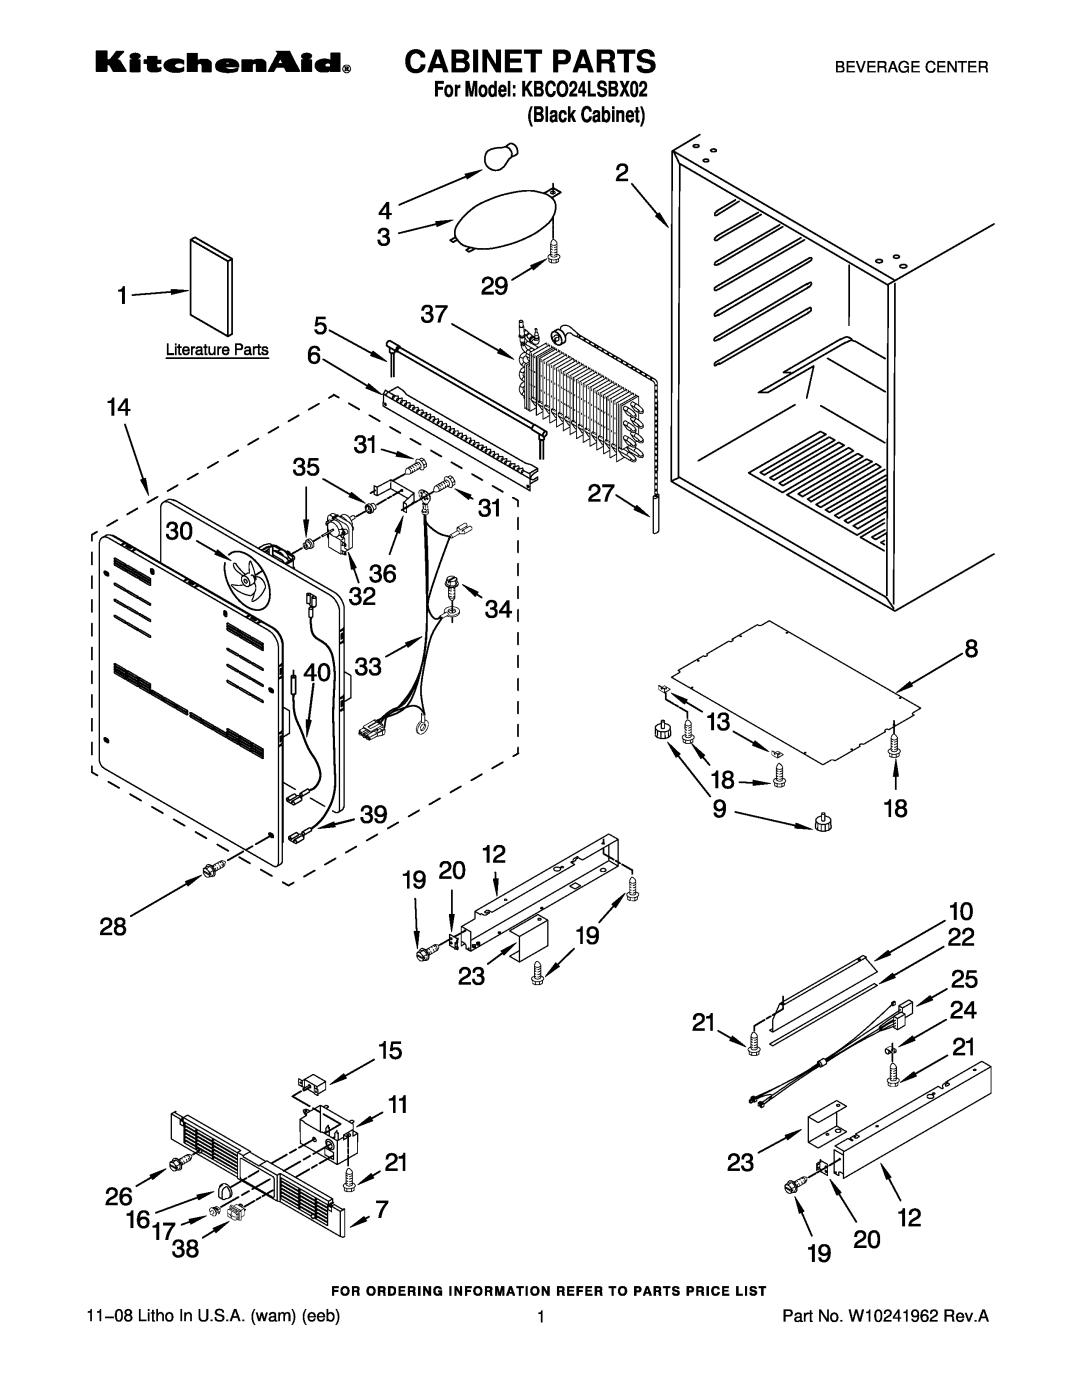 KitchenAid manual Cabinet Parts, 11−08 Litho In U.S.A. wam eeb, For Model KBCO24LSBX02 Black Cabinet, Beverage Center 